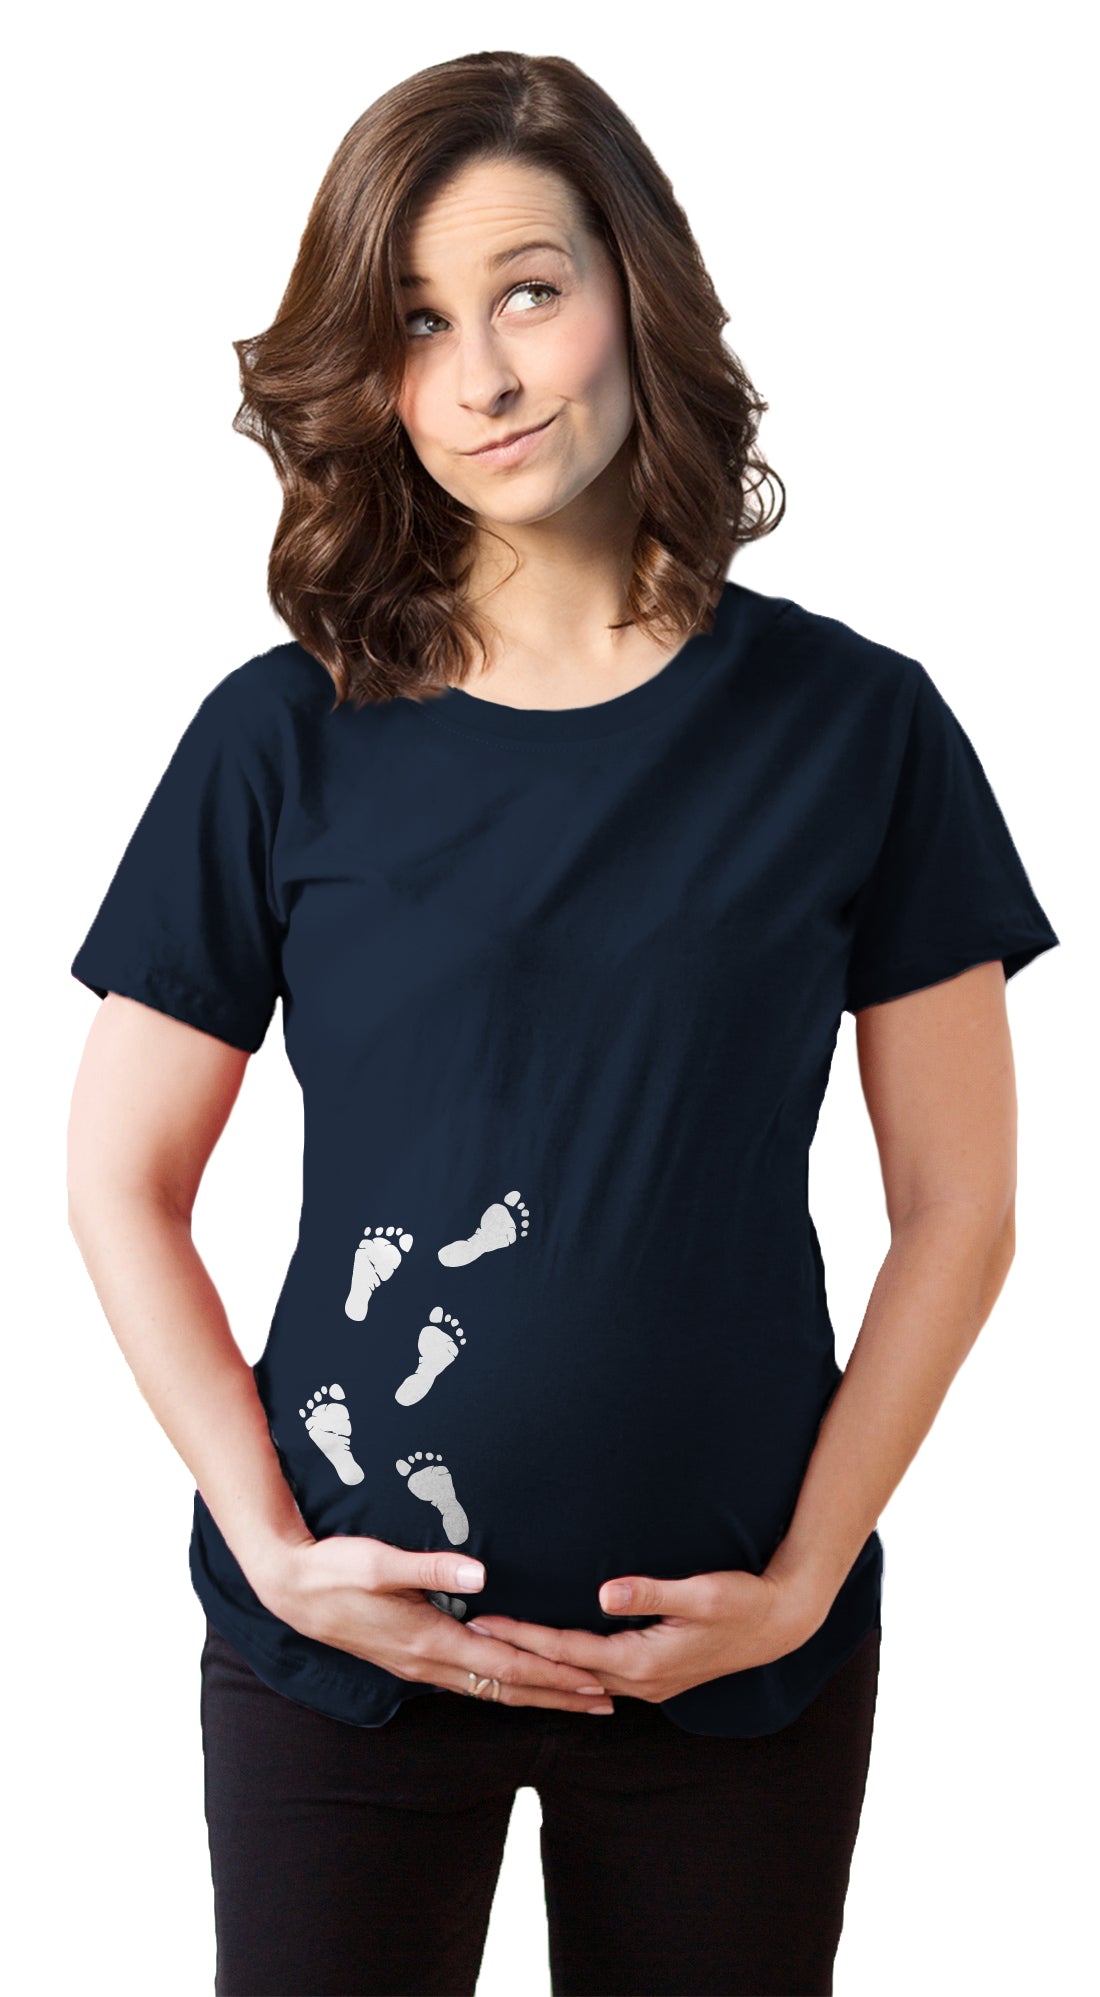 Maternity Baby Bump Footprints T Shirt Funny Cute Graphic